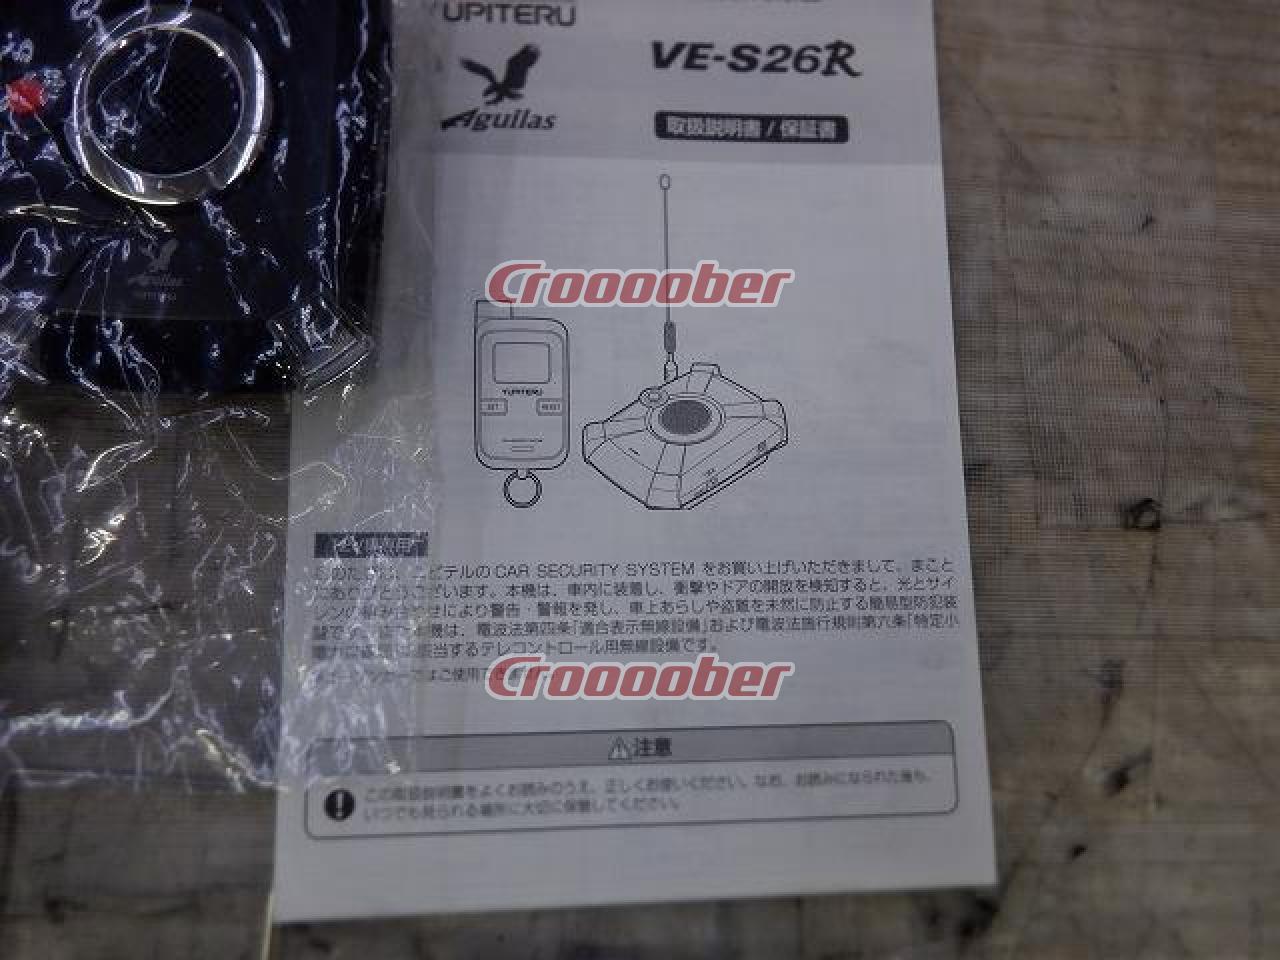 YUPITERU(ユピテル) カーセキュリティシステム VE-S26R | 電装系 セキュリティパーツの通販なら | Croooober(クルーバー)